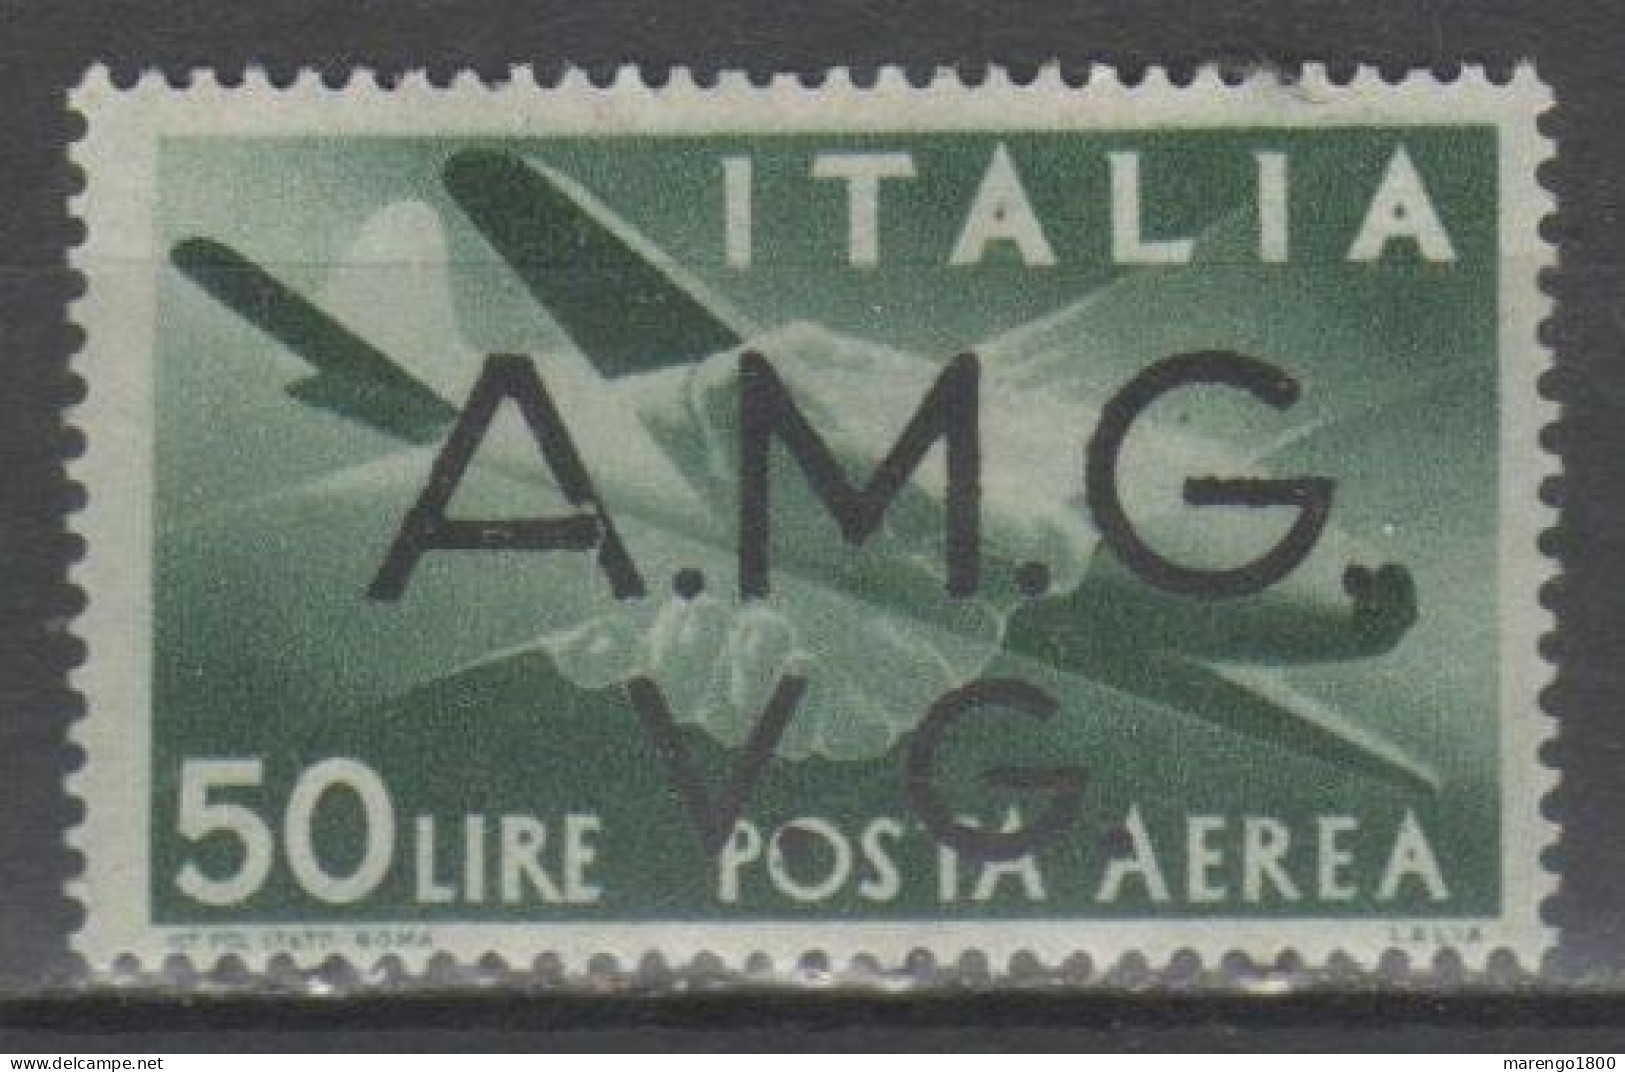 AMG VG 1946 - Posta Aerea 50 L.  * - Mint/hinged